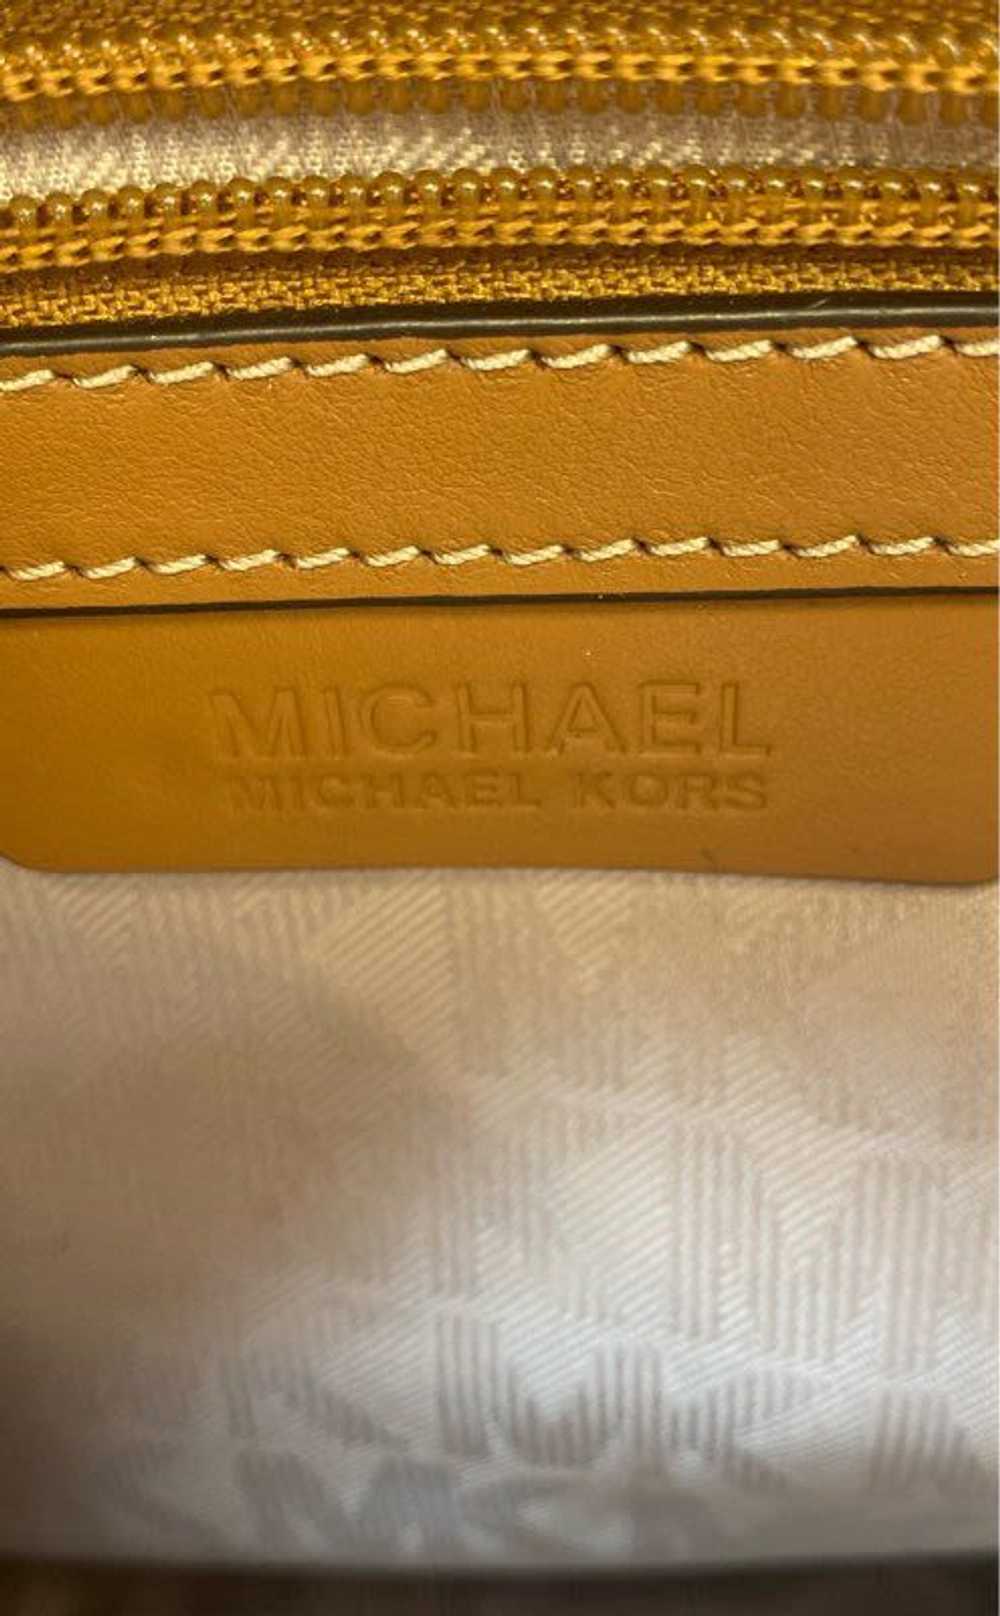 Michael Kors Romy Brown Leather Crossbody Bag - image 5